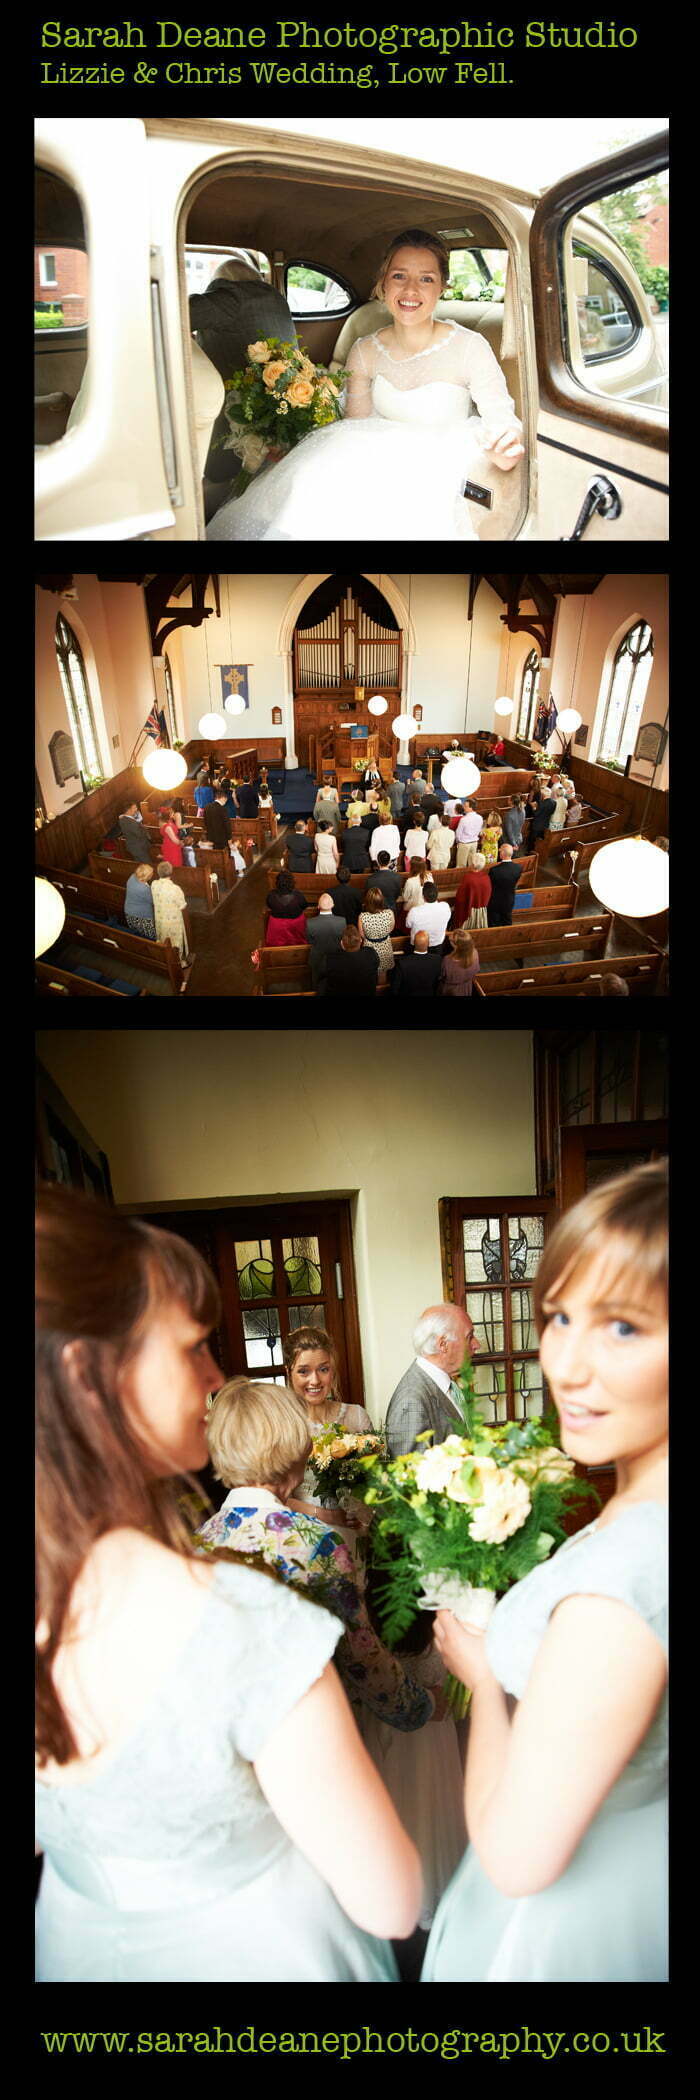 1, lizzie and chris wedding photos at low fell church, gateshead